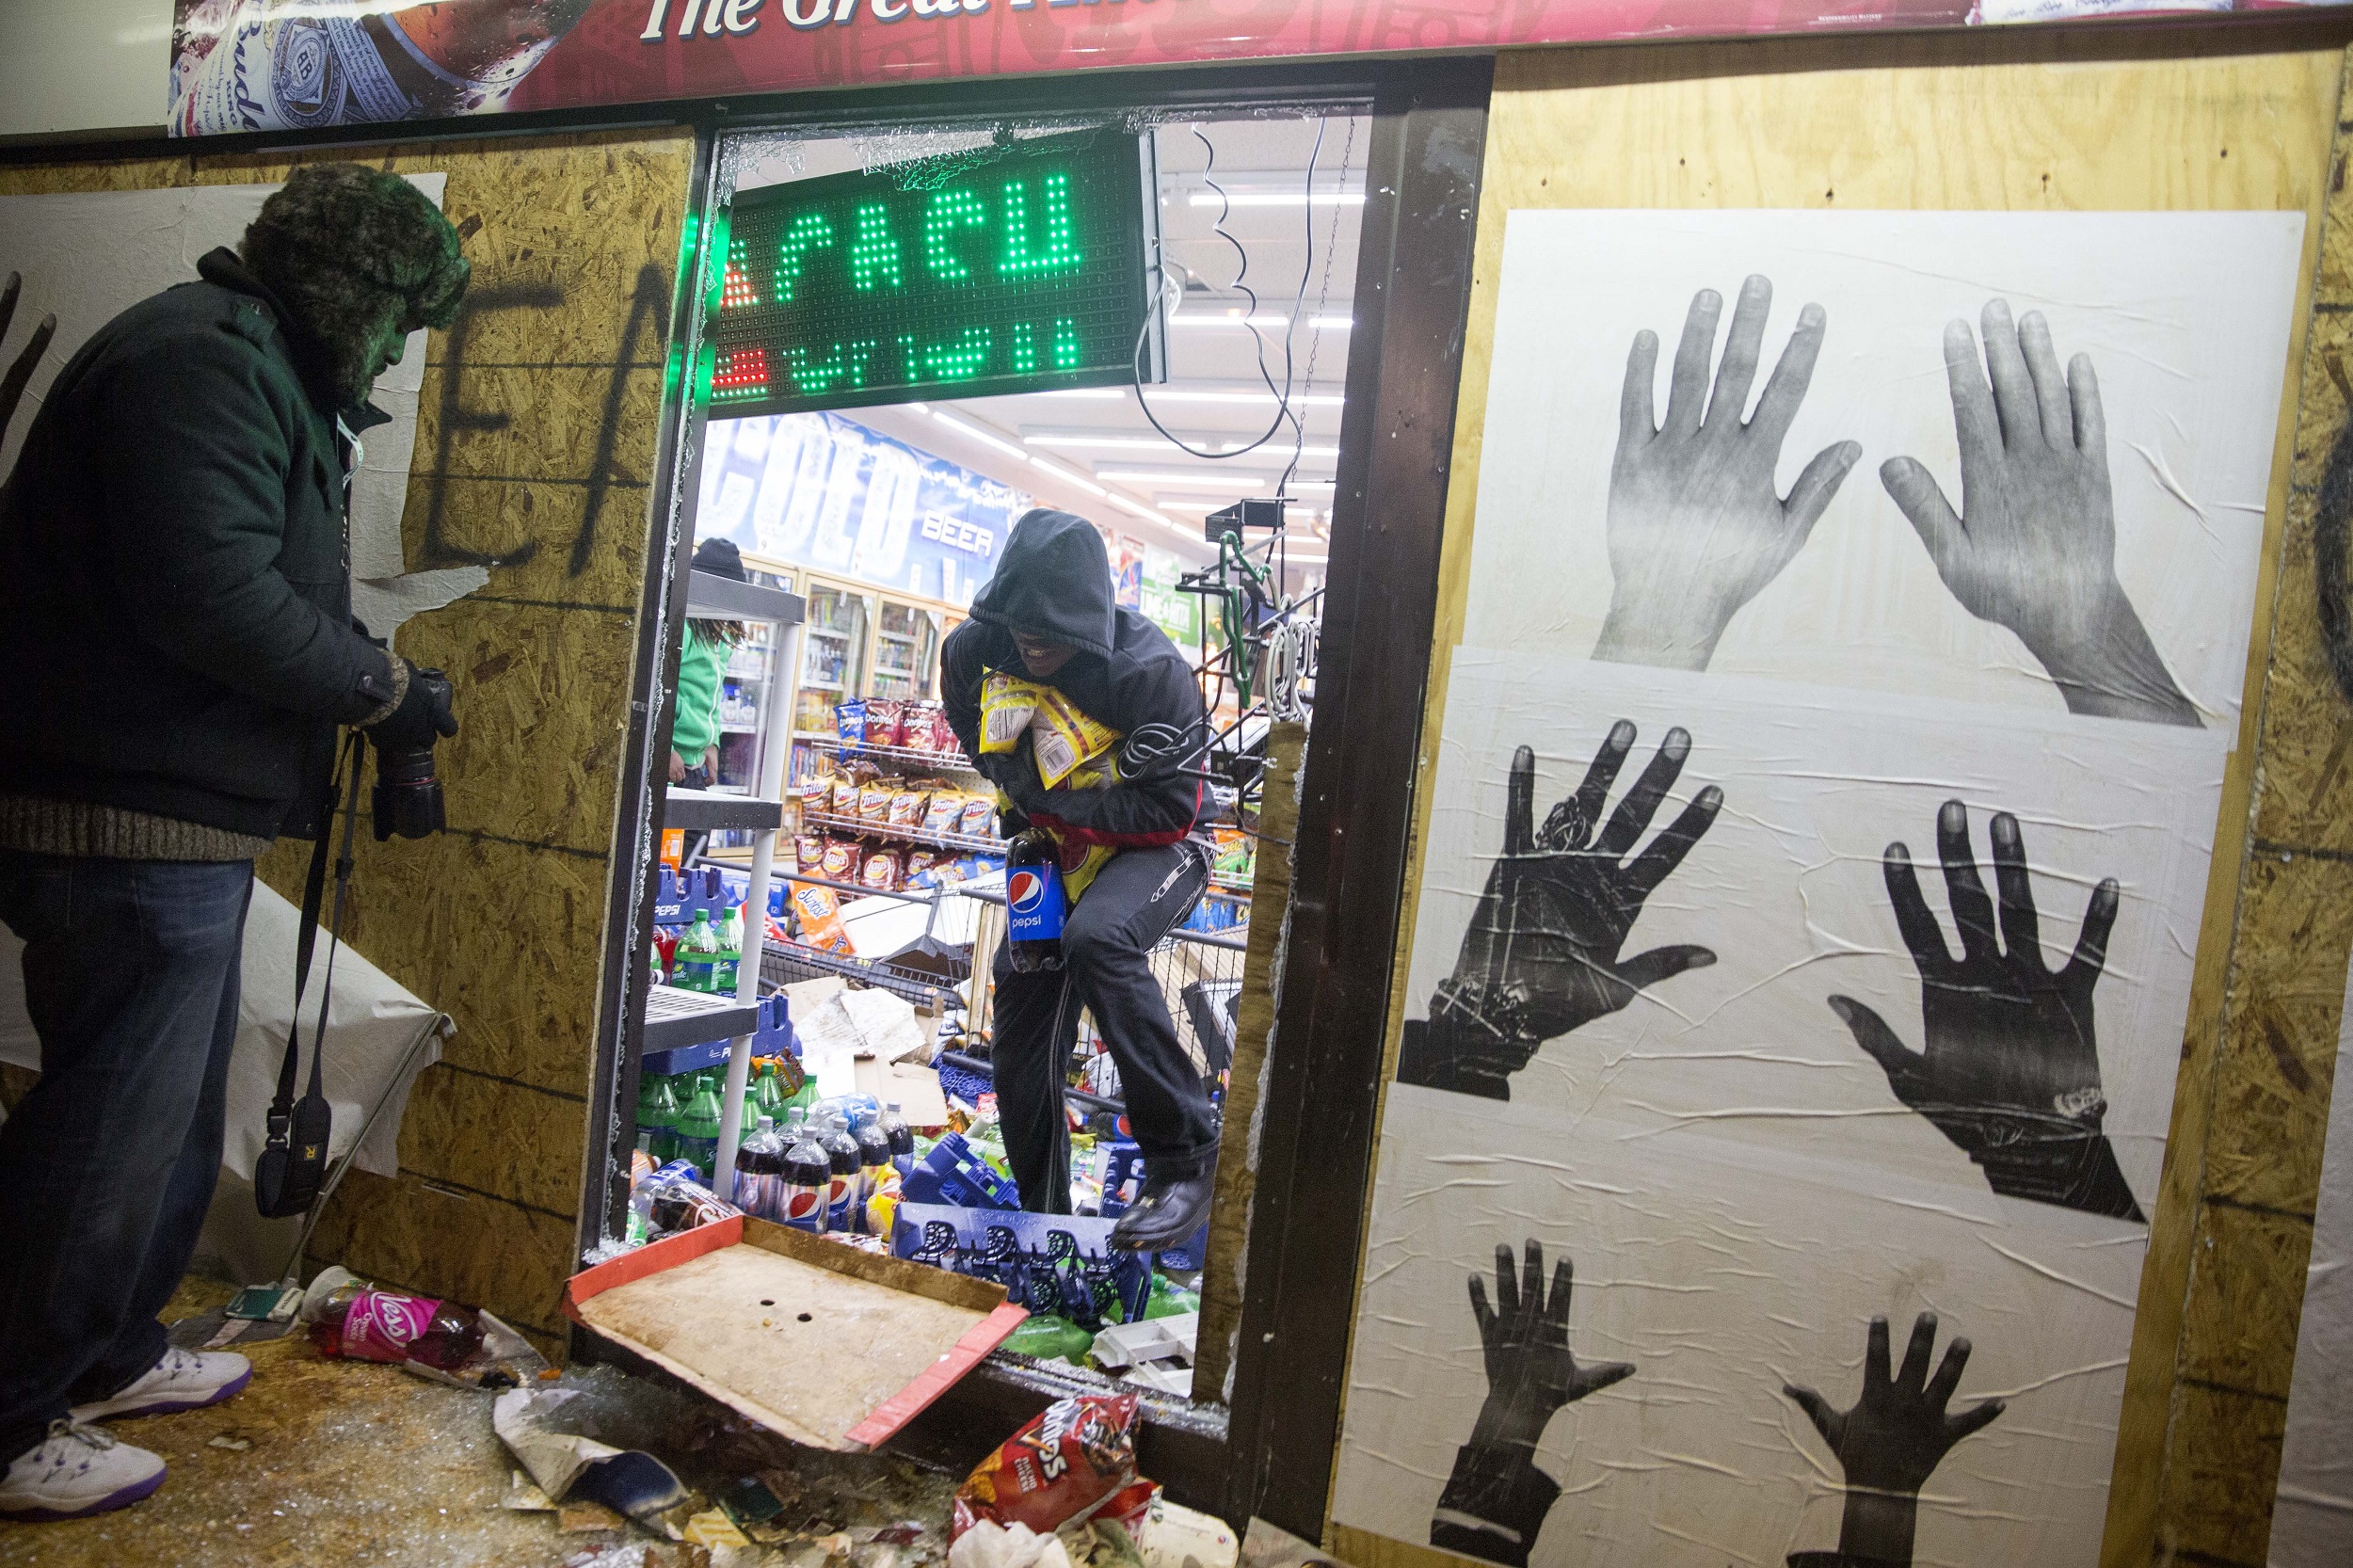 Ferguson Getty Images /Aaron P. Bernstein